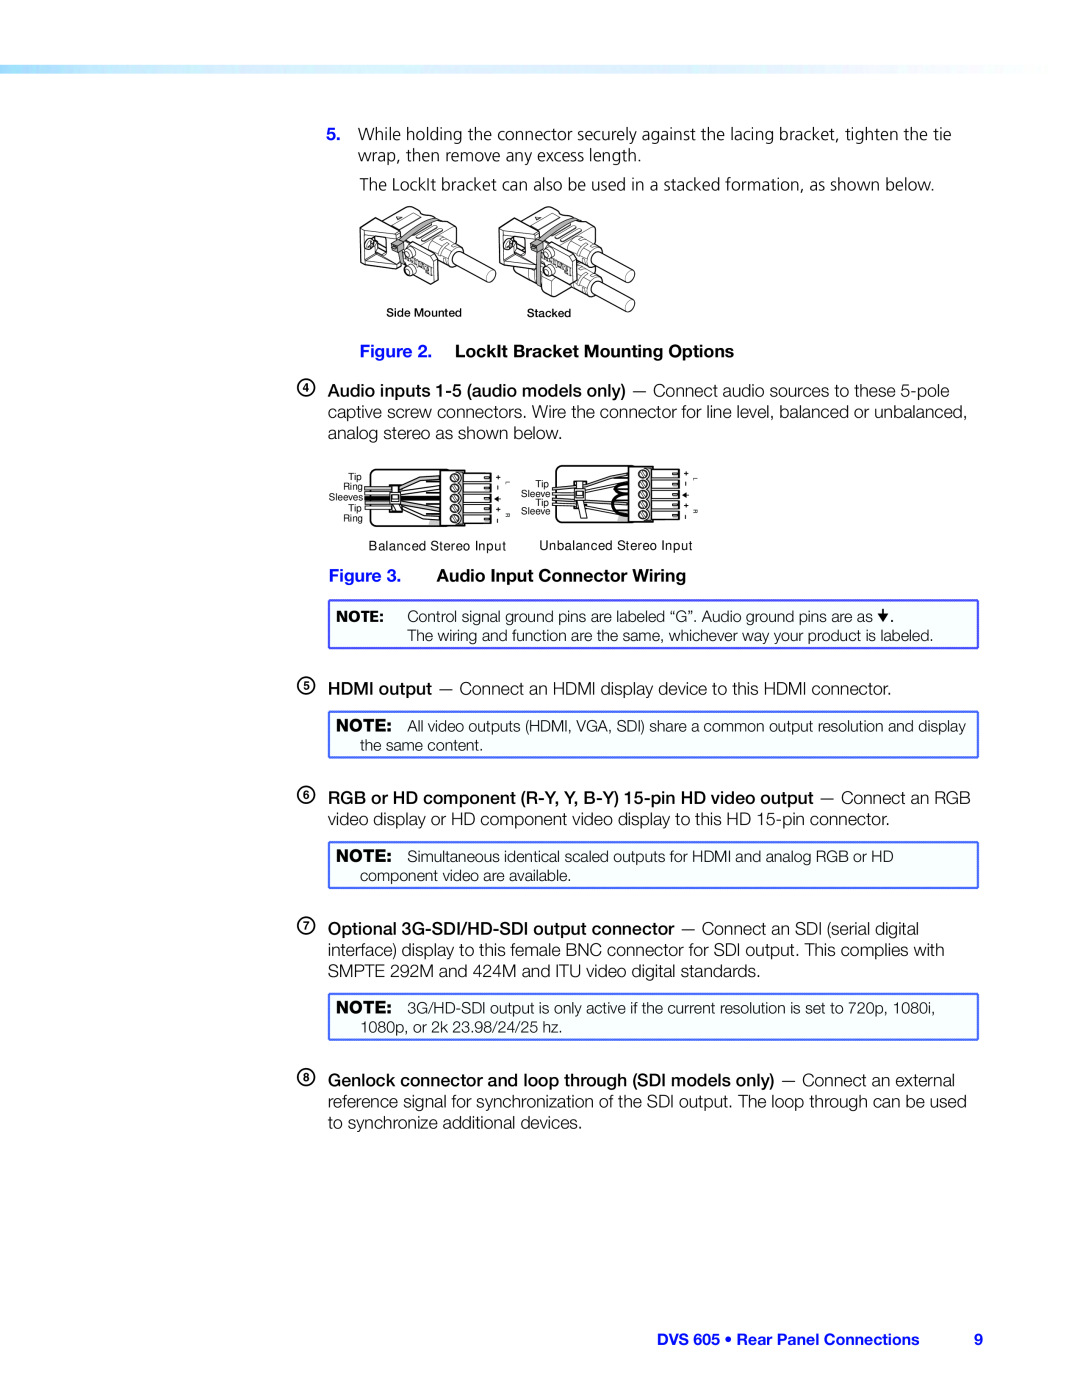 Extron electronic DVS 605 manual LockIt Bracket Mounting Options, Audio Input Connector Wiring, Figure 